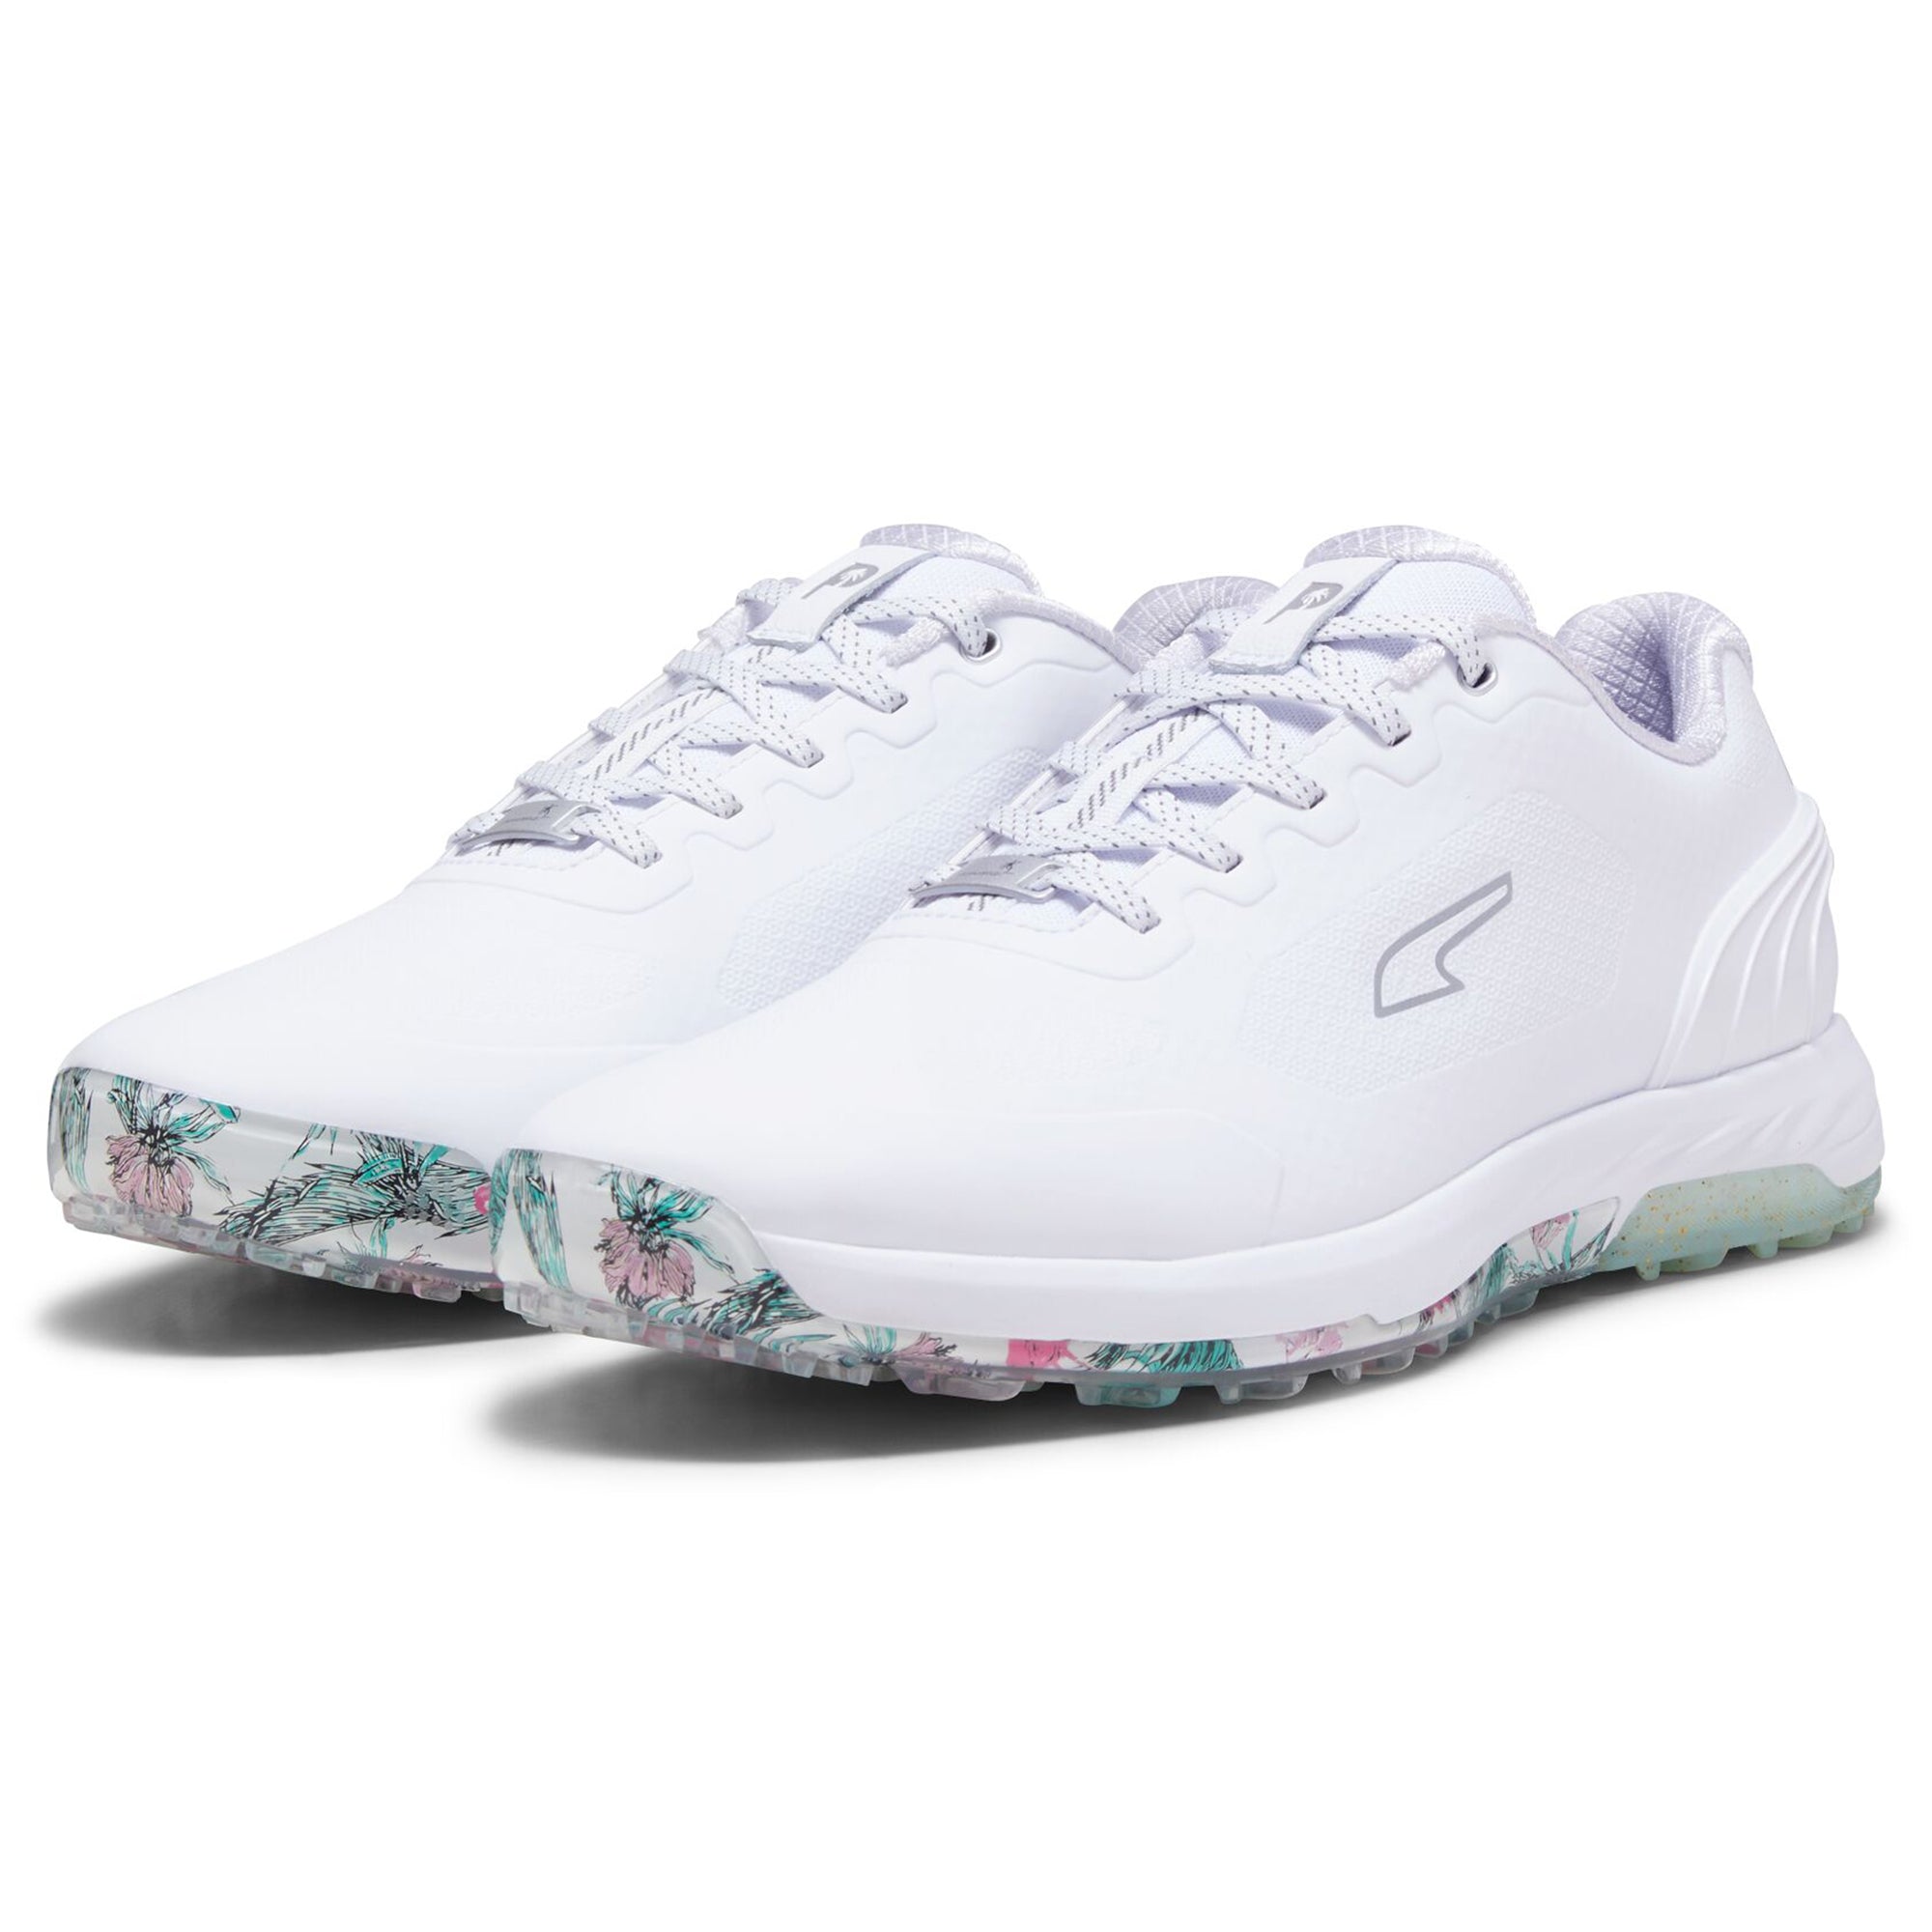 puma-x-ptc-alphacat-nitro-golf-shoes-379340-puma-white-aqua-green-shocking-pink-01